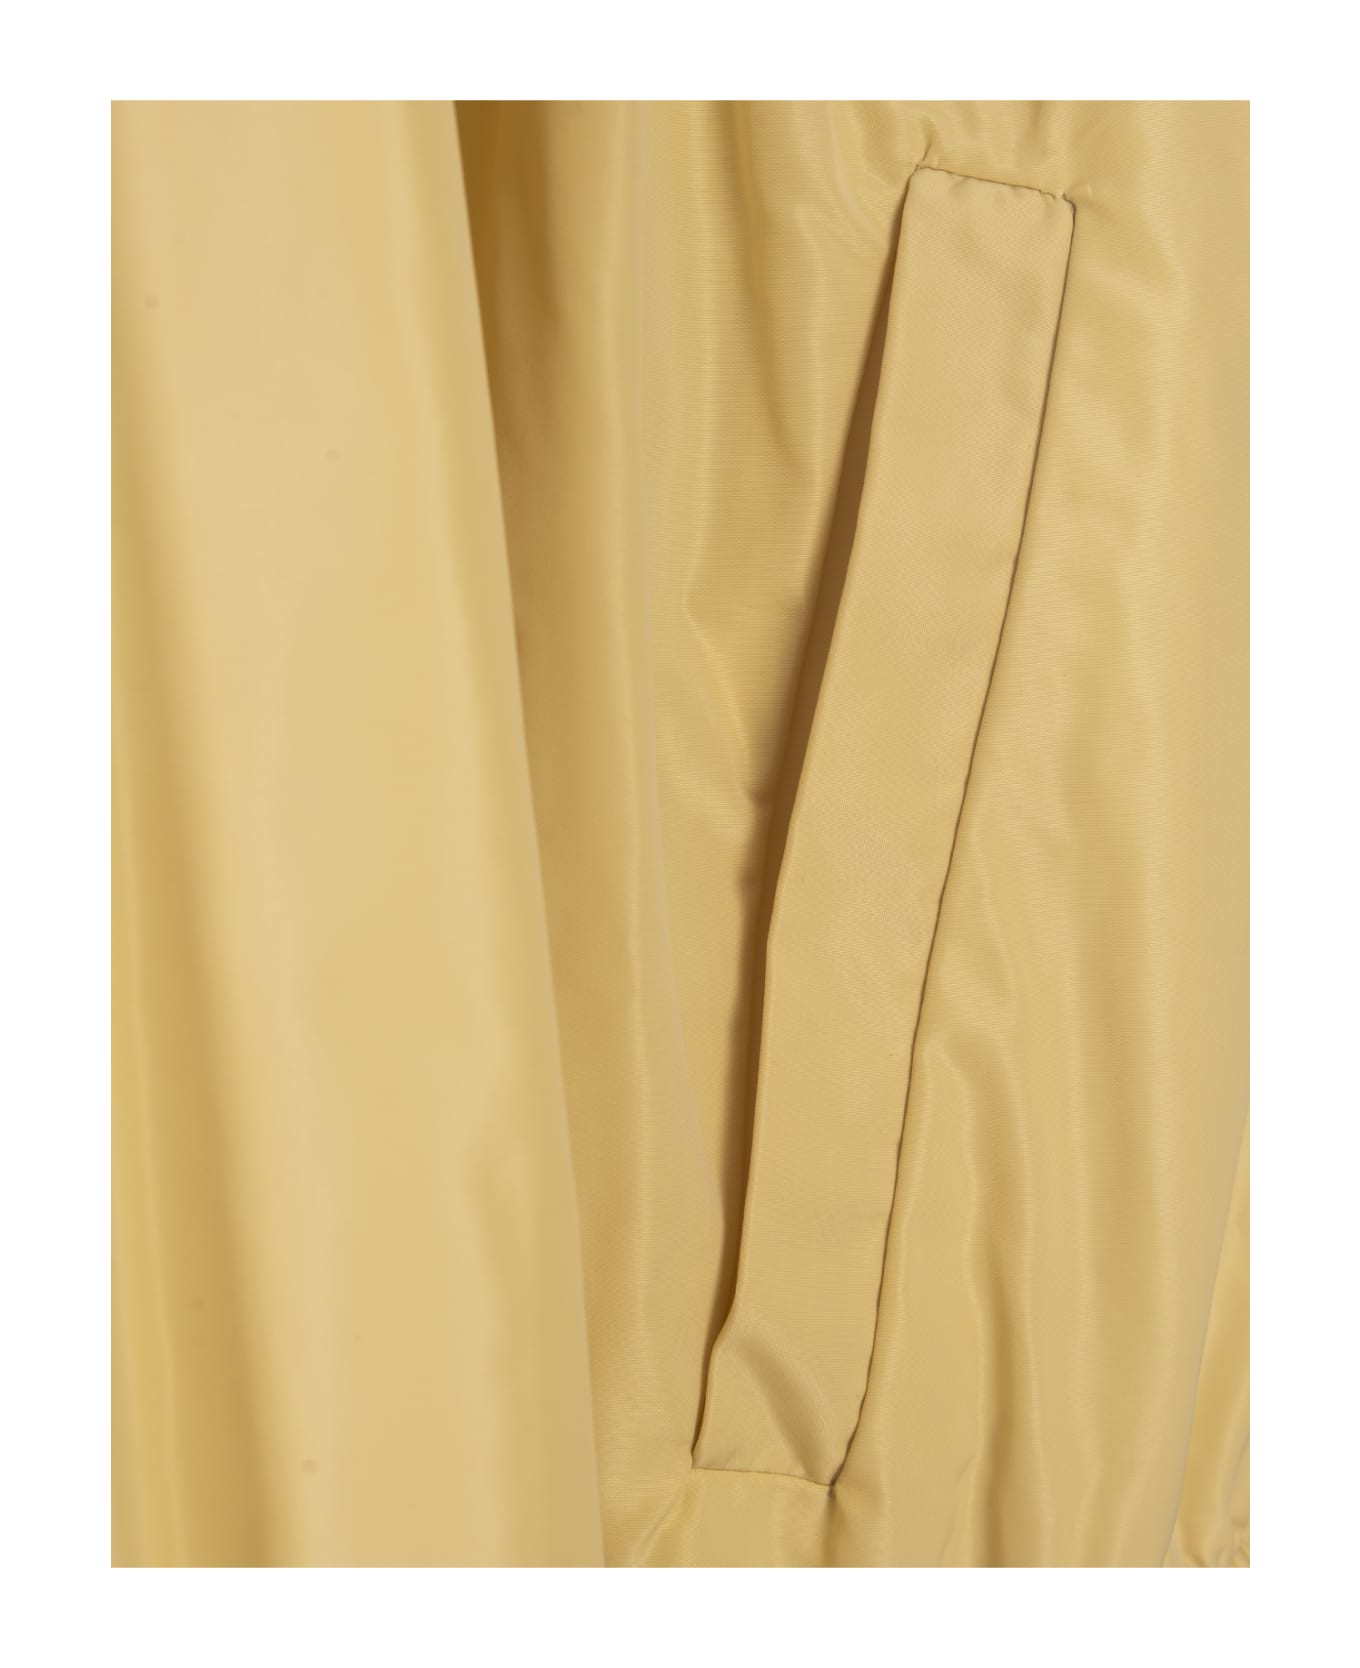 Aspesi Yellow Technical Polyester Taffeta Shirt - Yellow